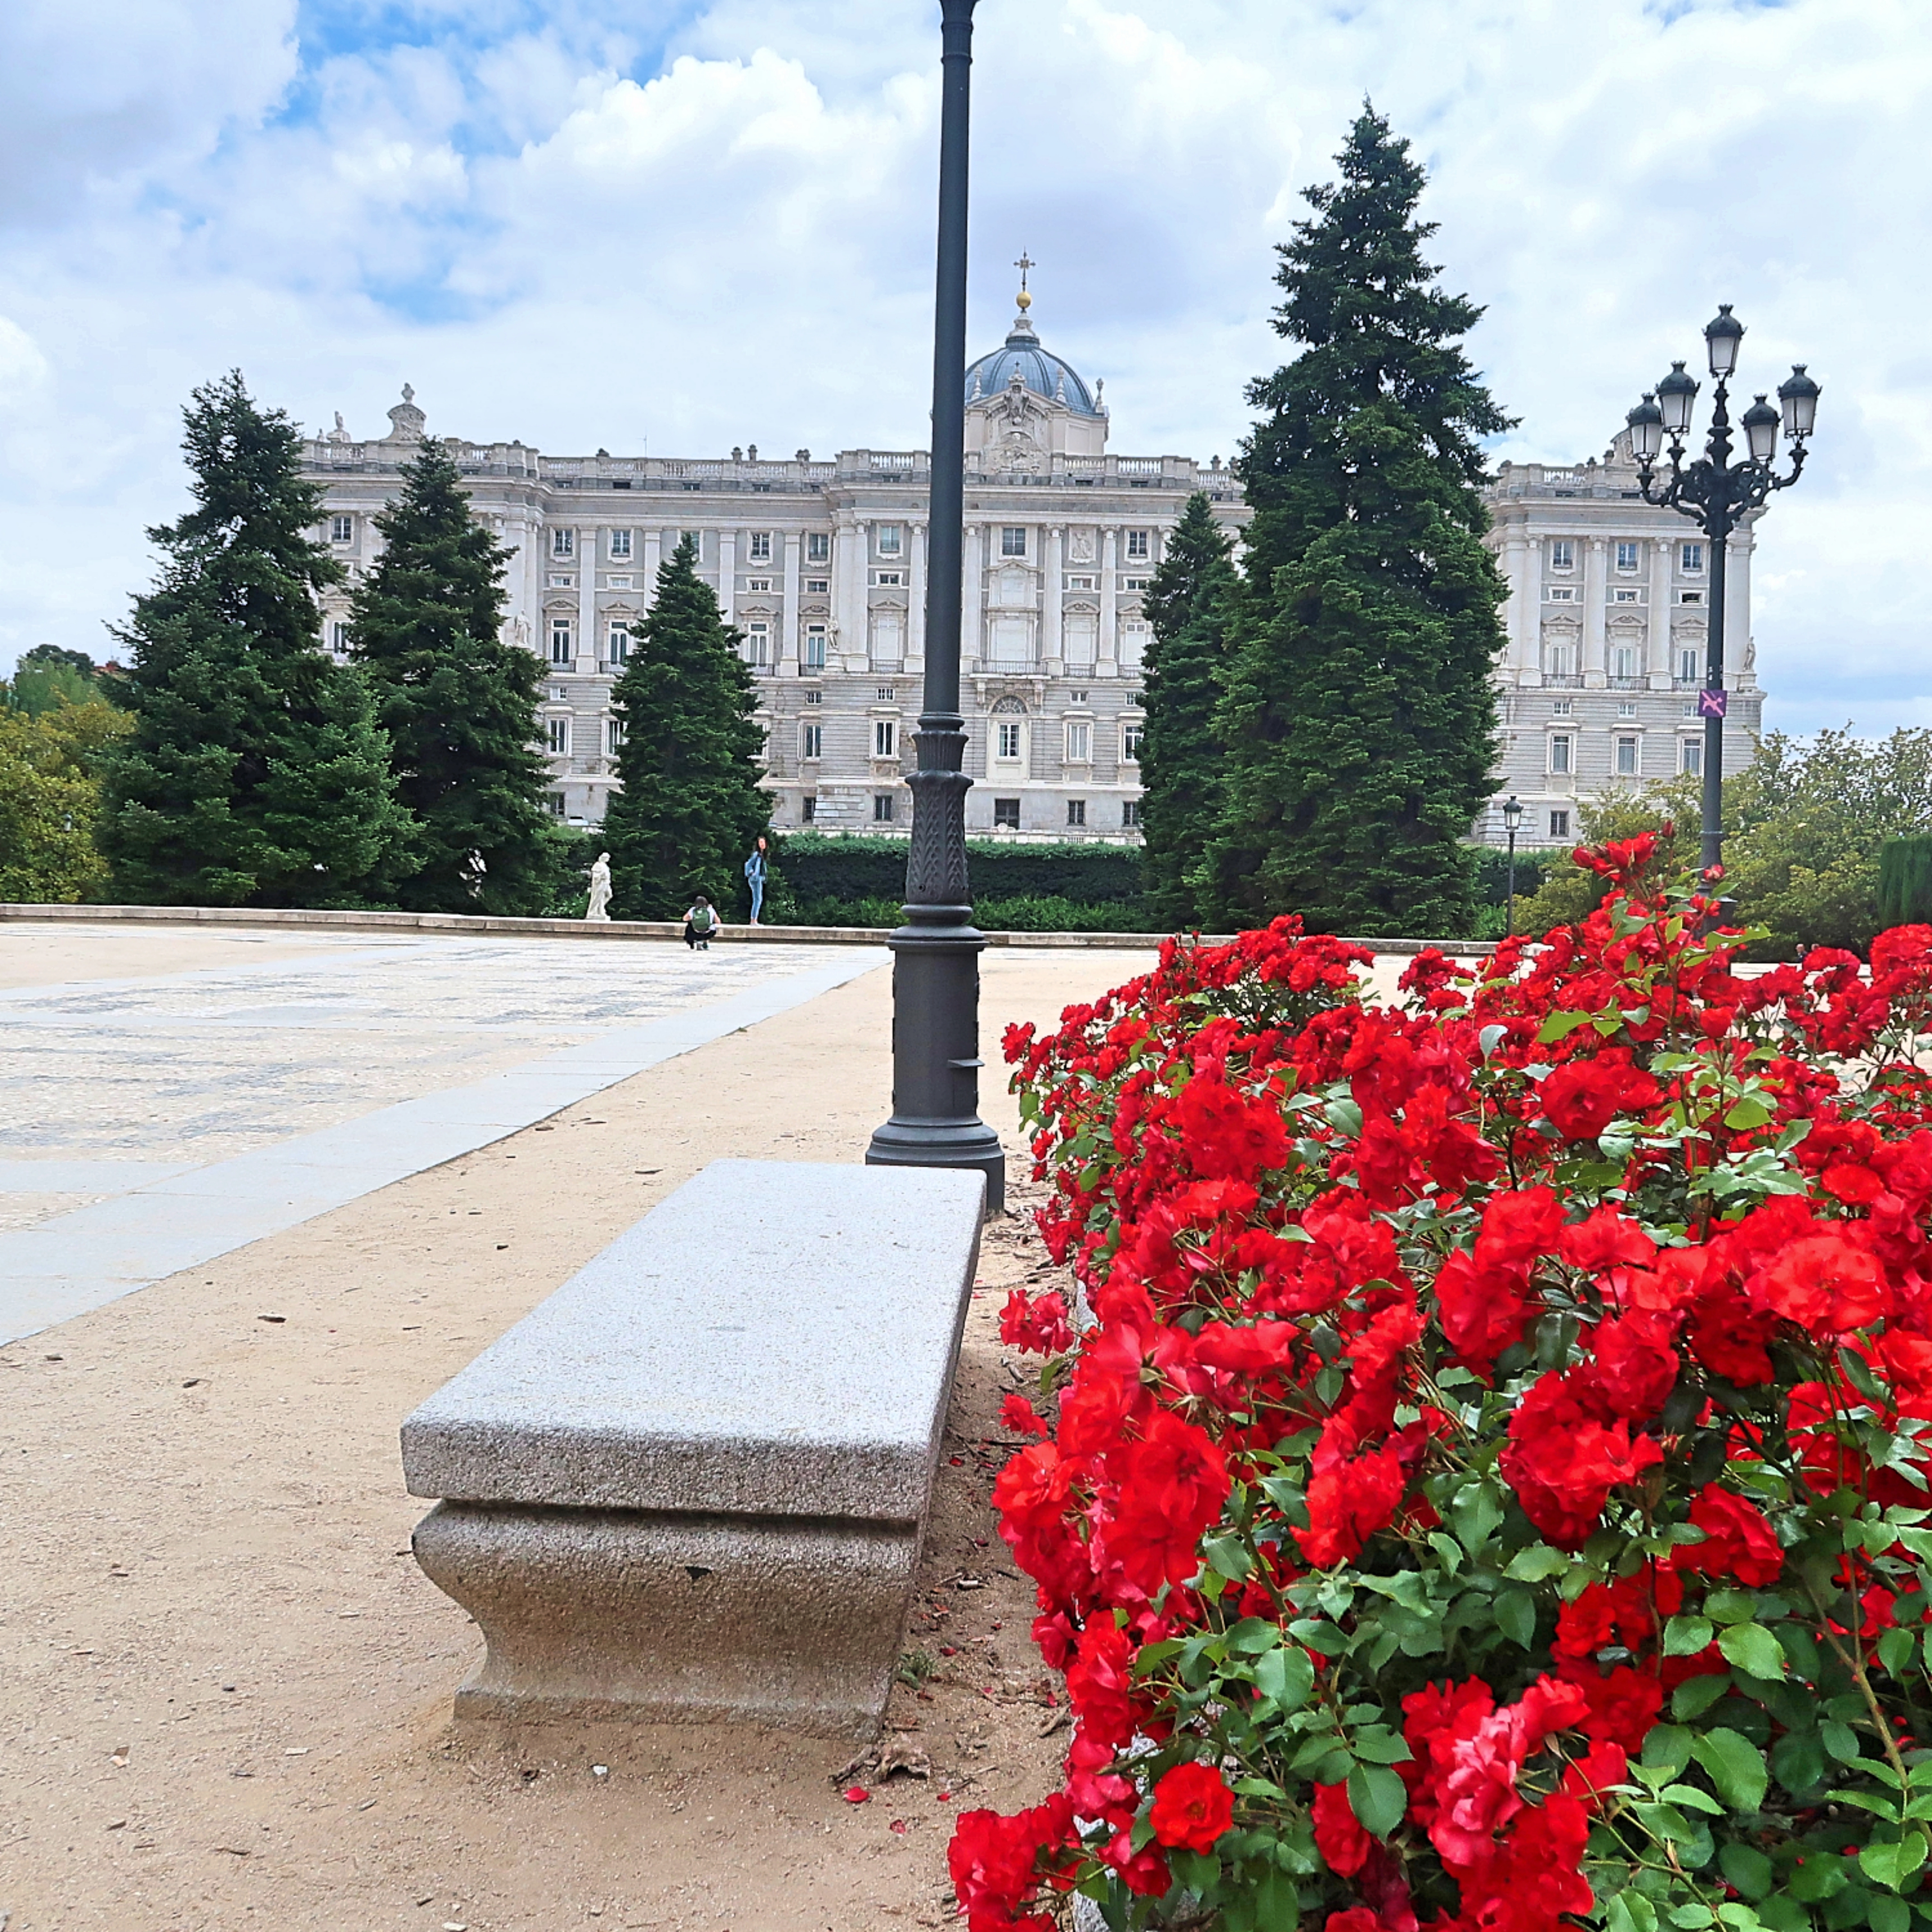 Spanish Royal Palace through the flowers 